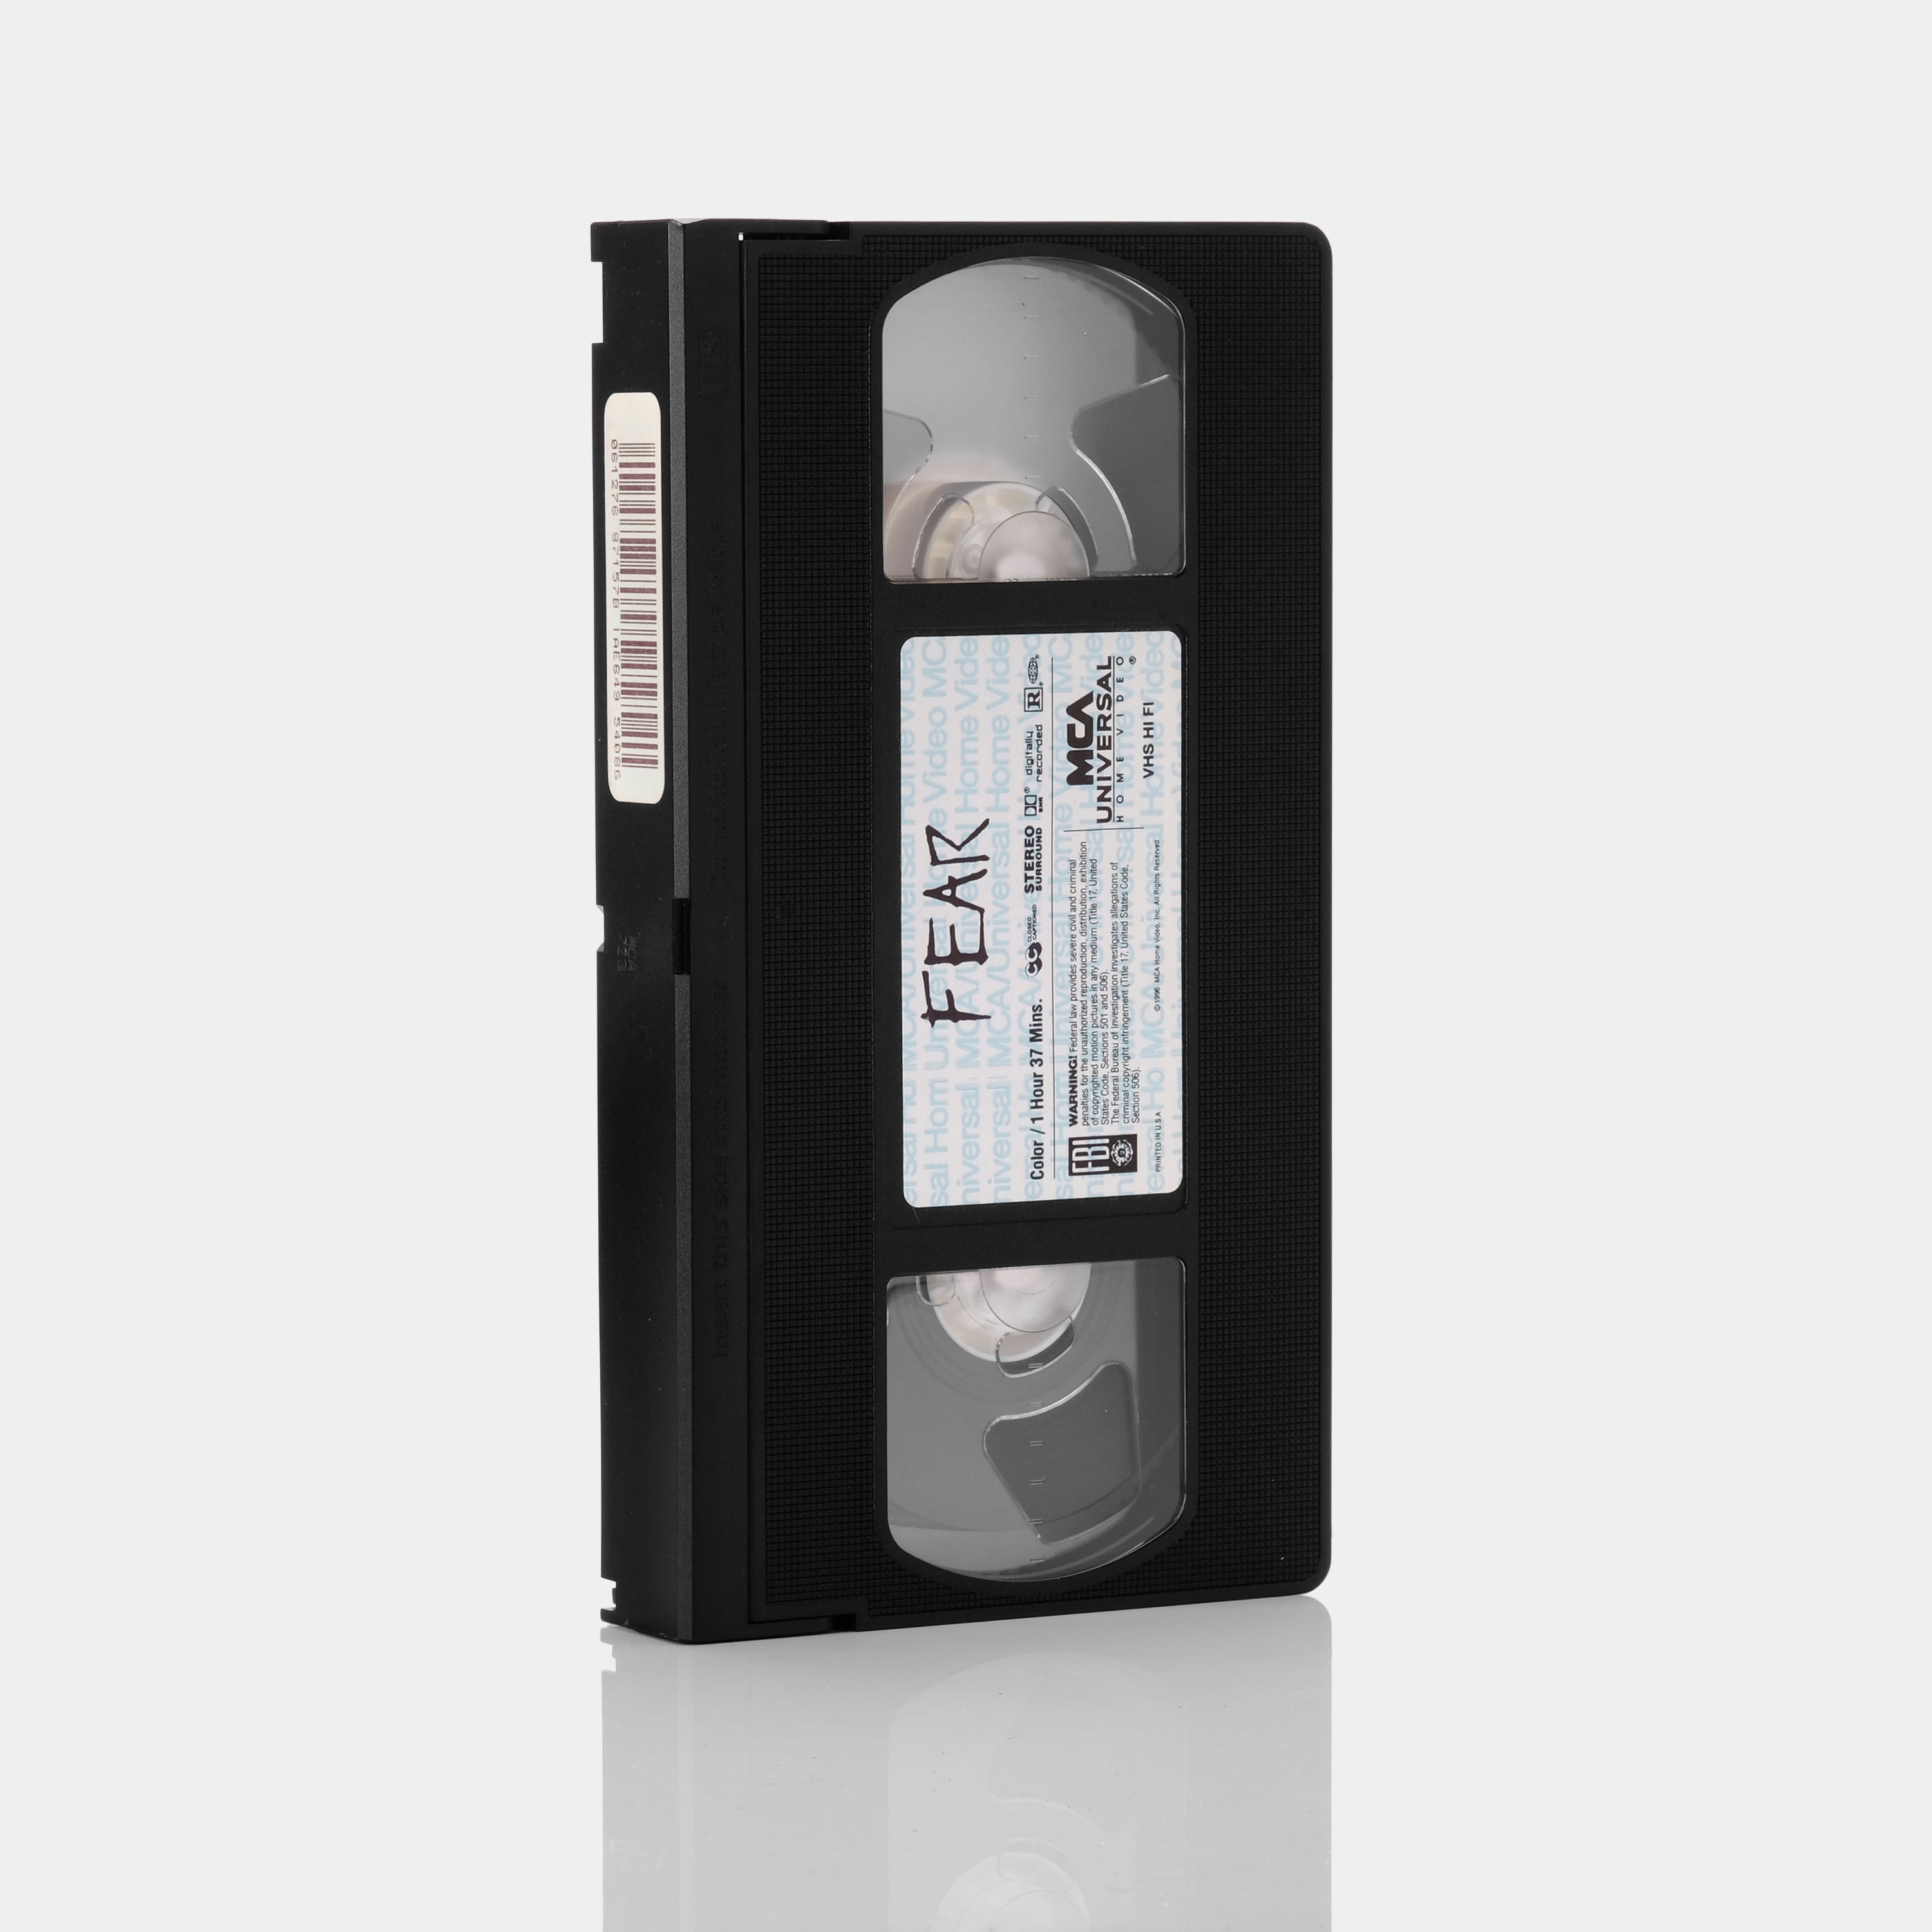 Fear VHS Tape